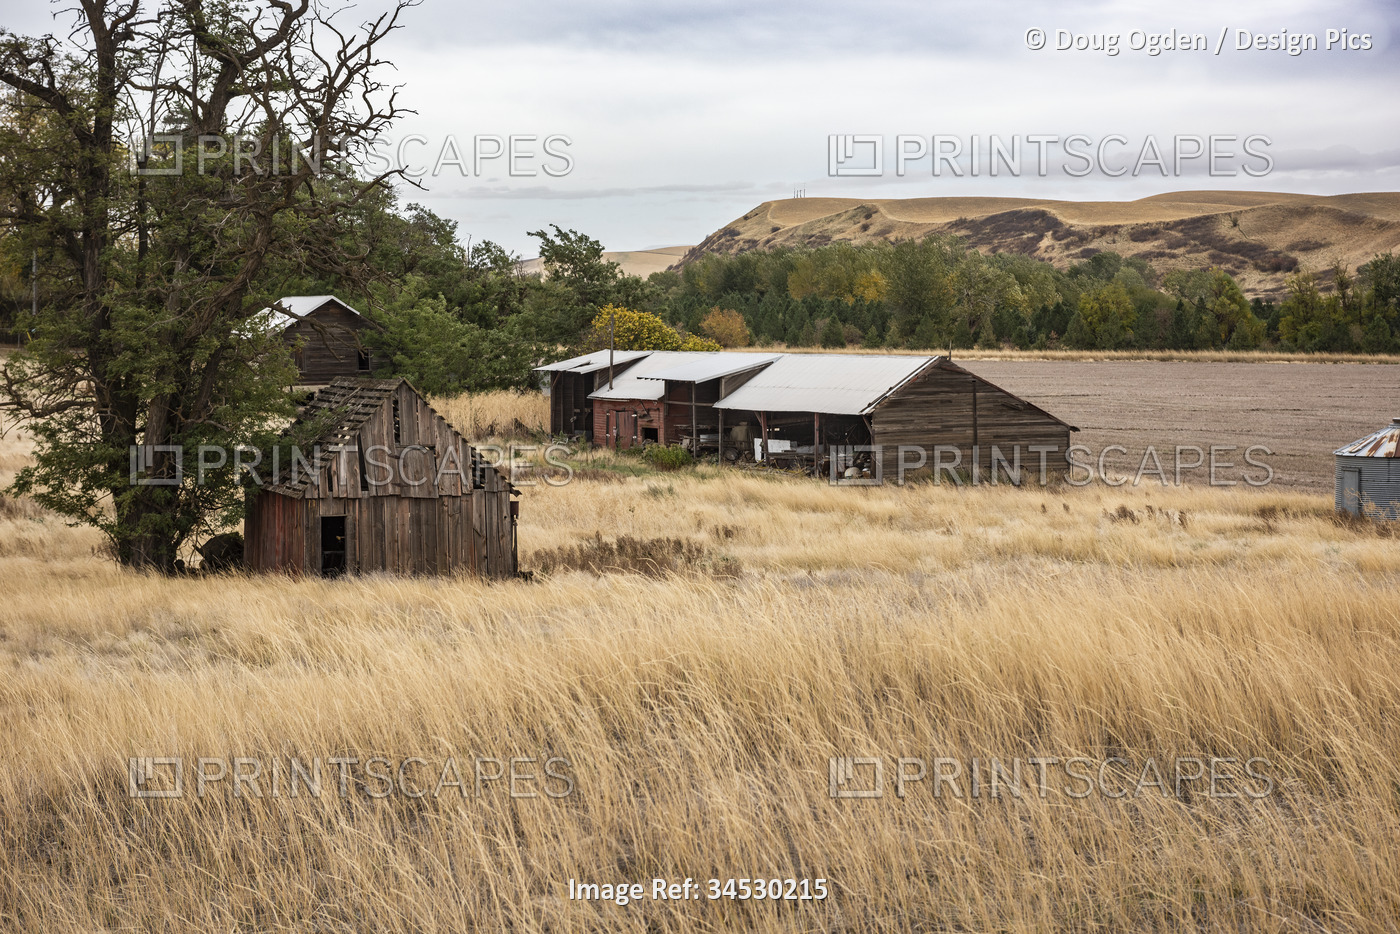 Abandoned barn and outbuildings in Eastern Washington, USA; Prescott, ...